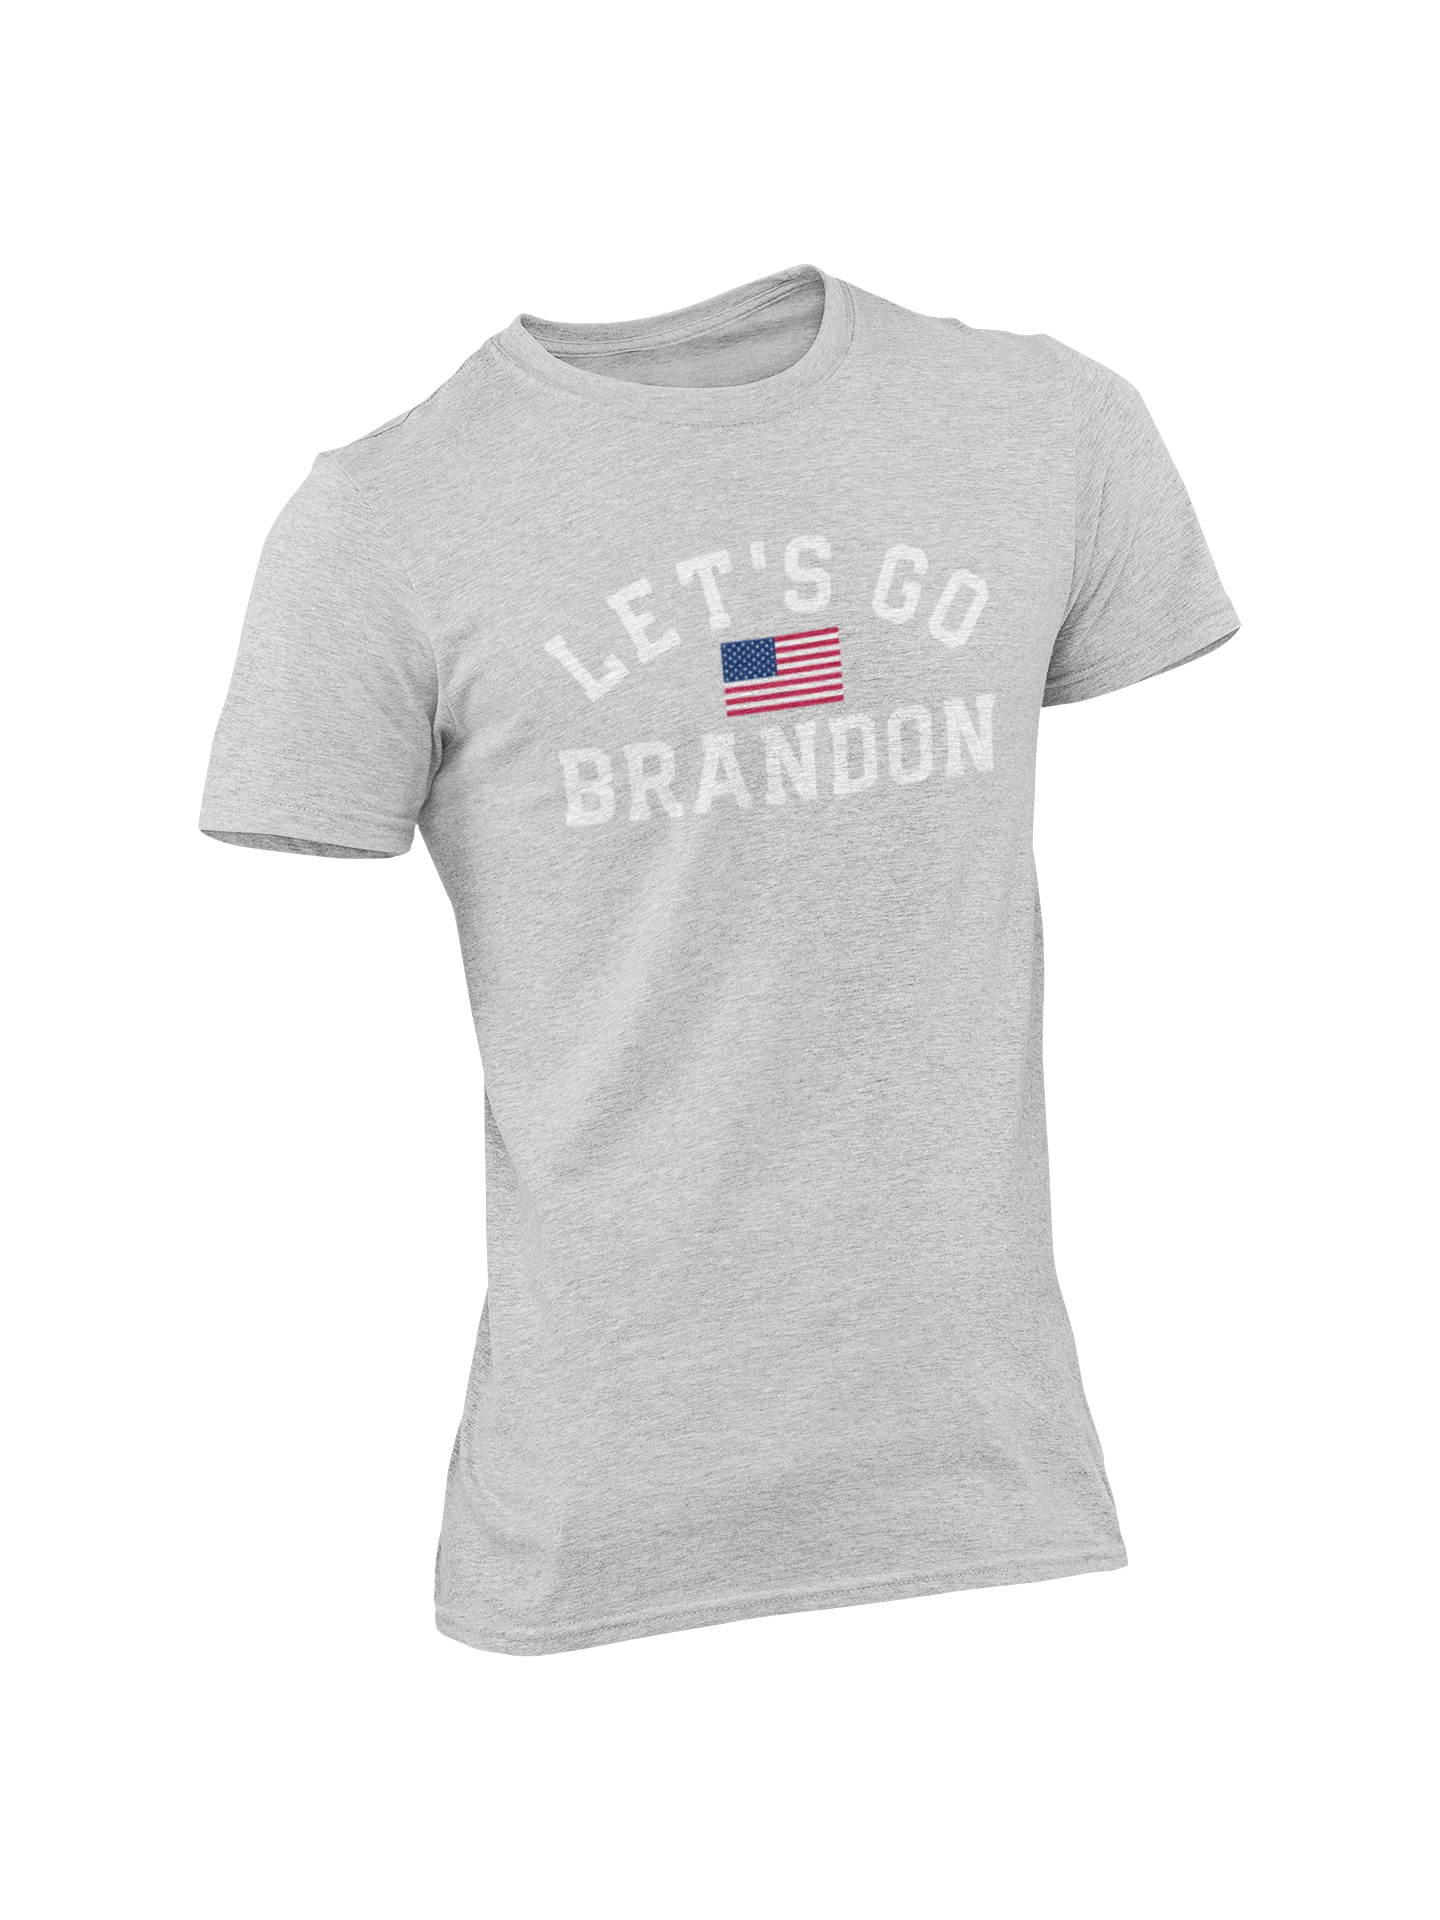 Let's Go Brandon T-Shirt – The Patriotic Products